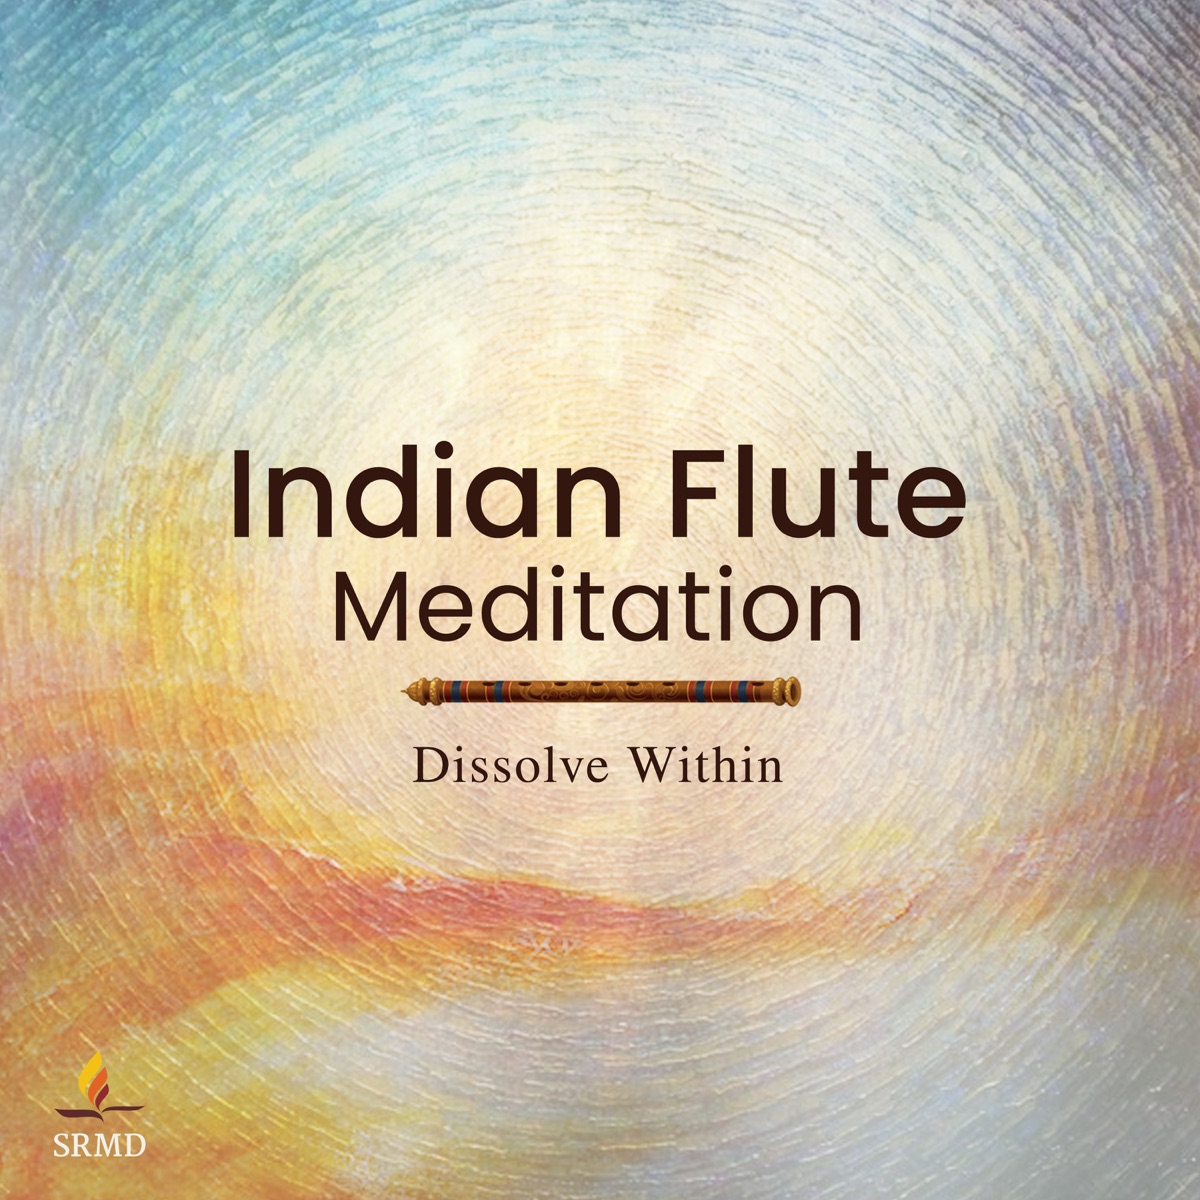 Indian Flute Meditation: Dissolve Within - Album by SRMD Bhakti - Apple  Music